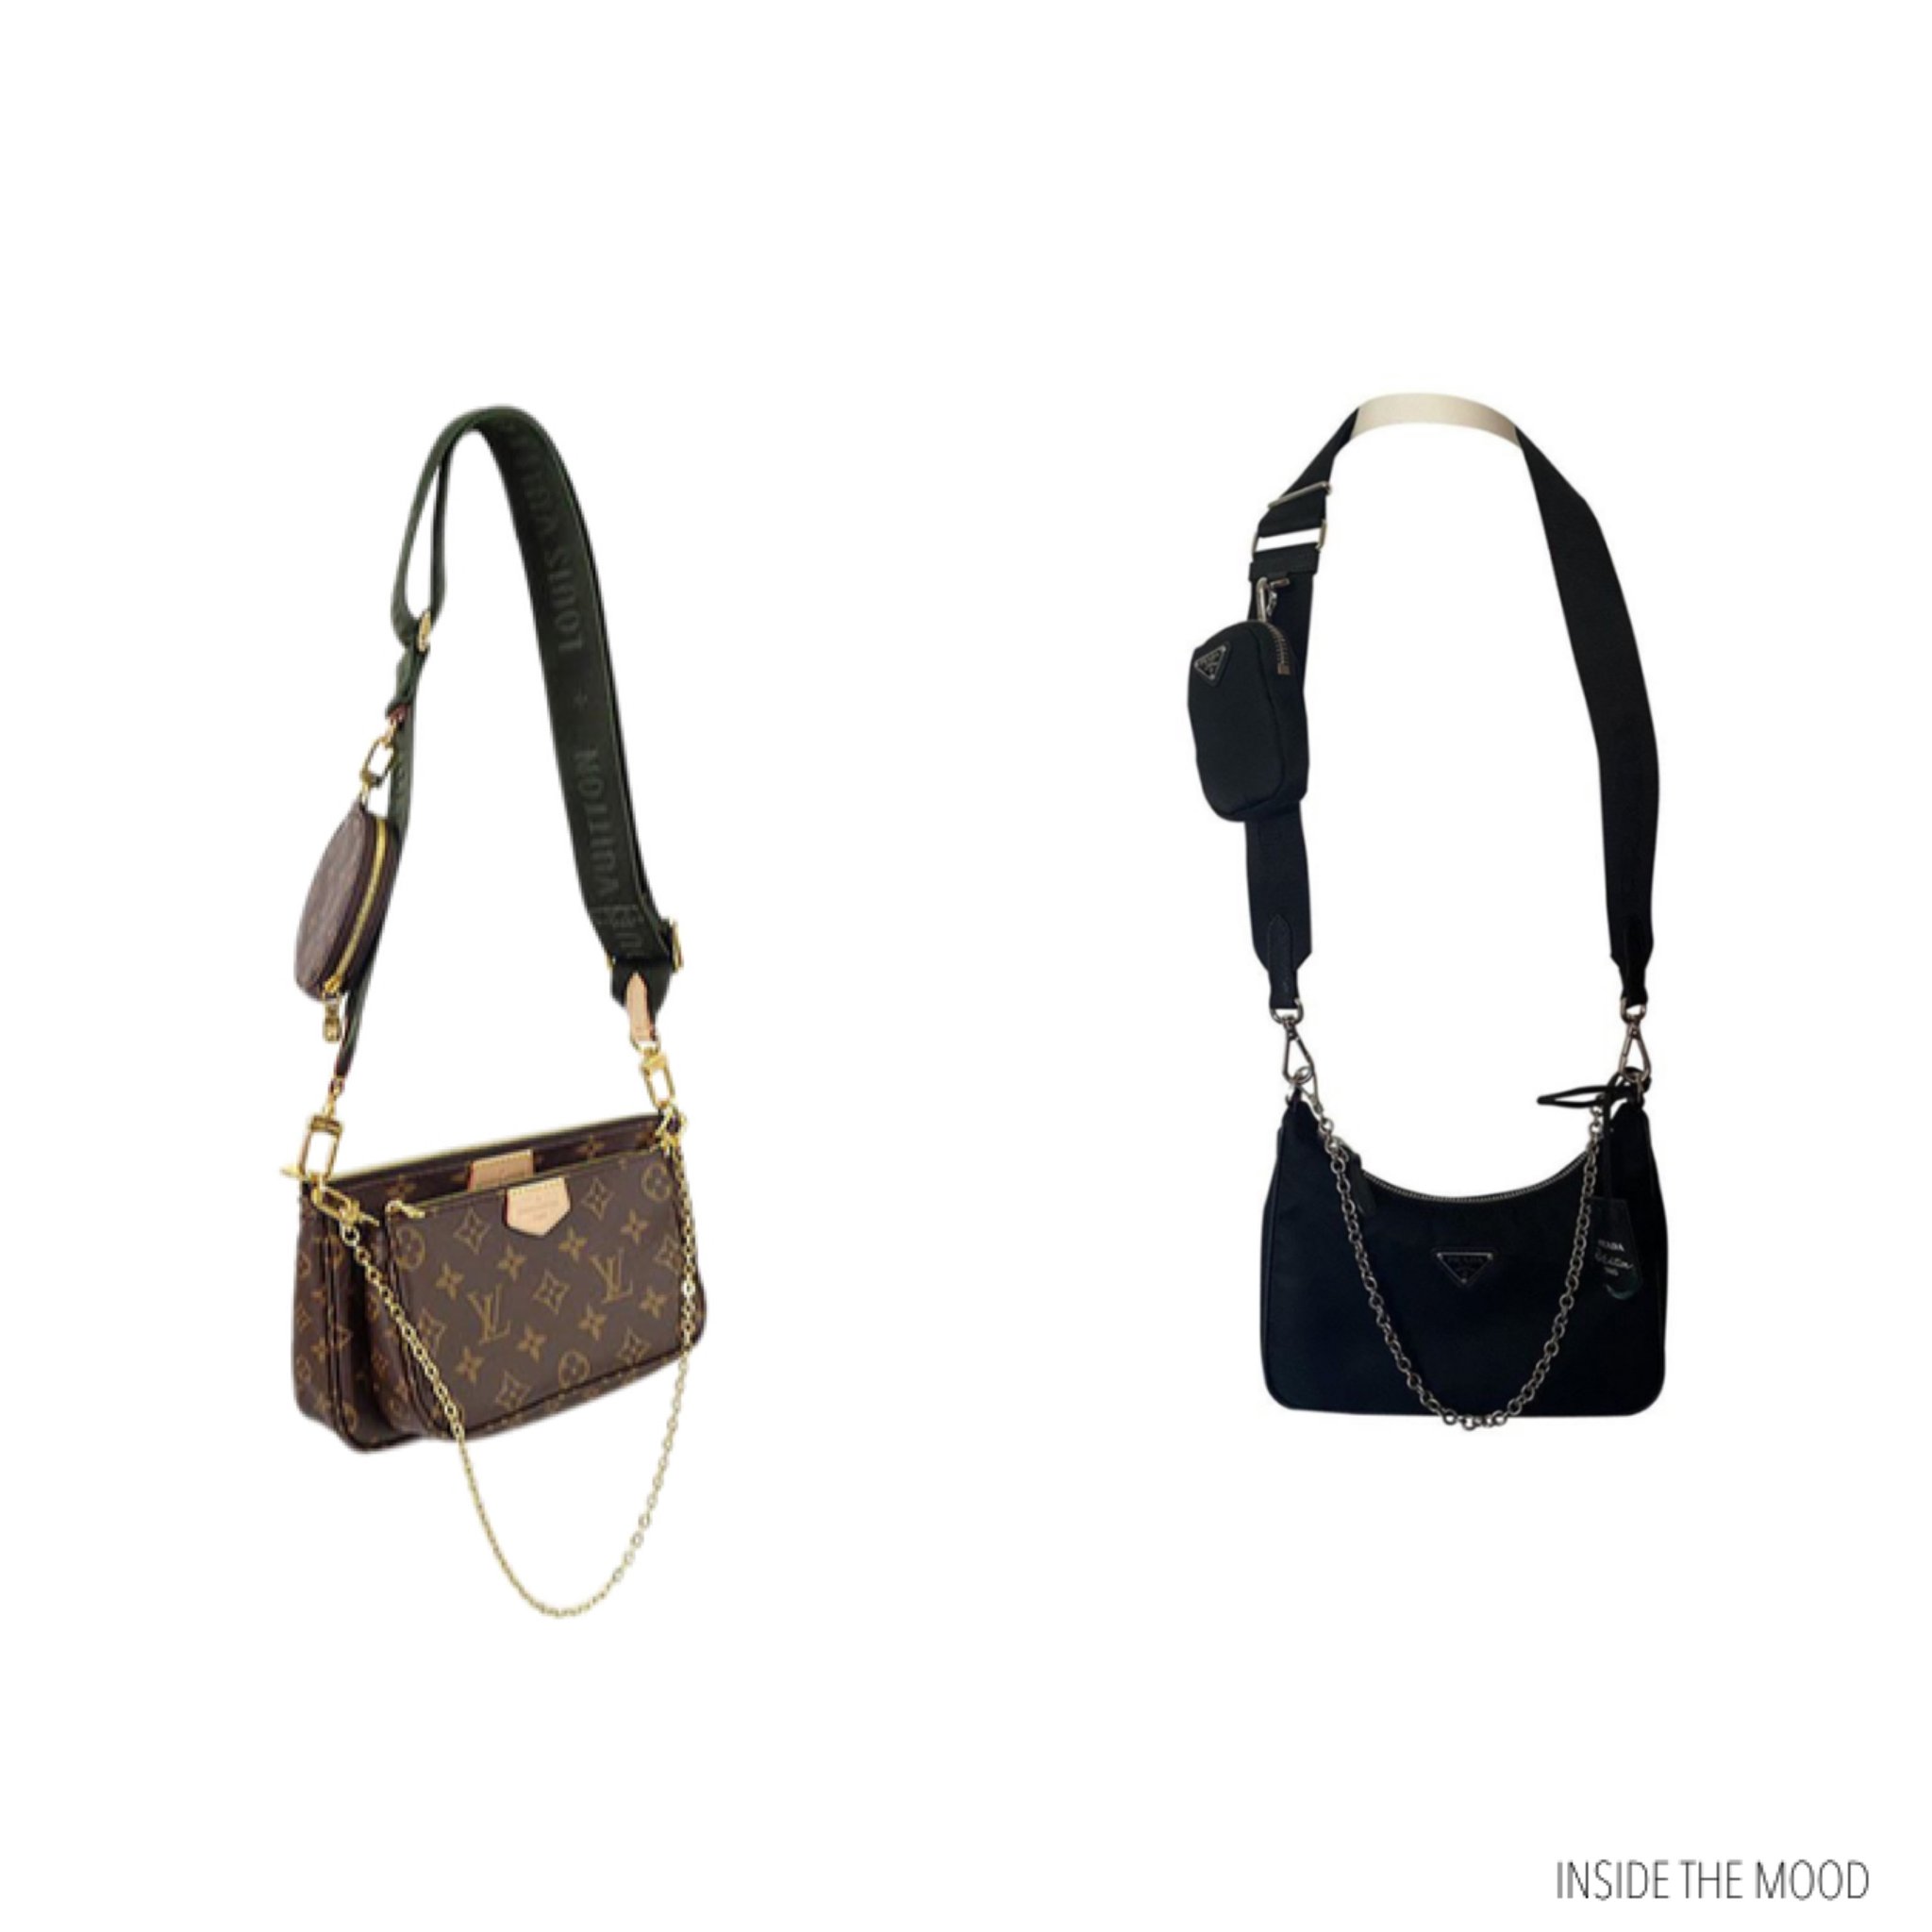 WHICH ONE DO I GET?! Prada Re Edition 2005 VS Louis Vuitton Multi